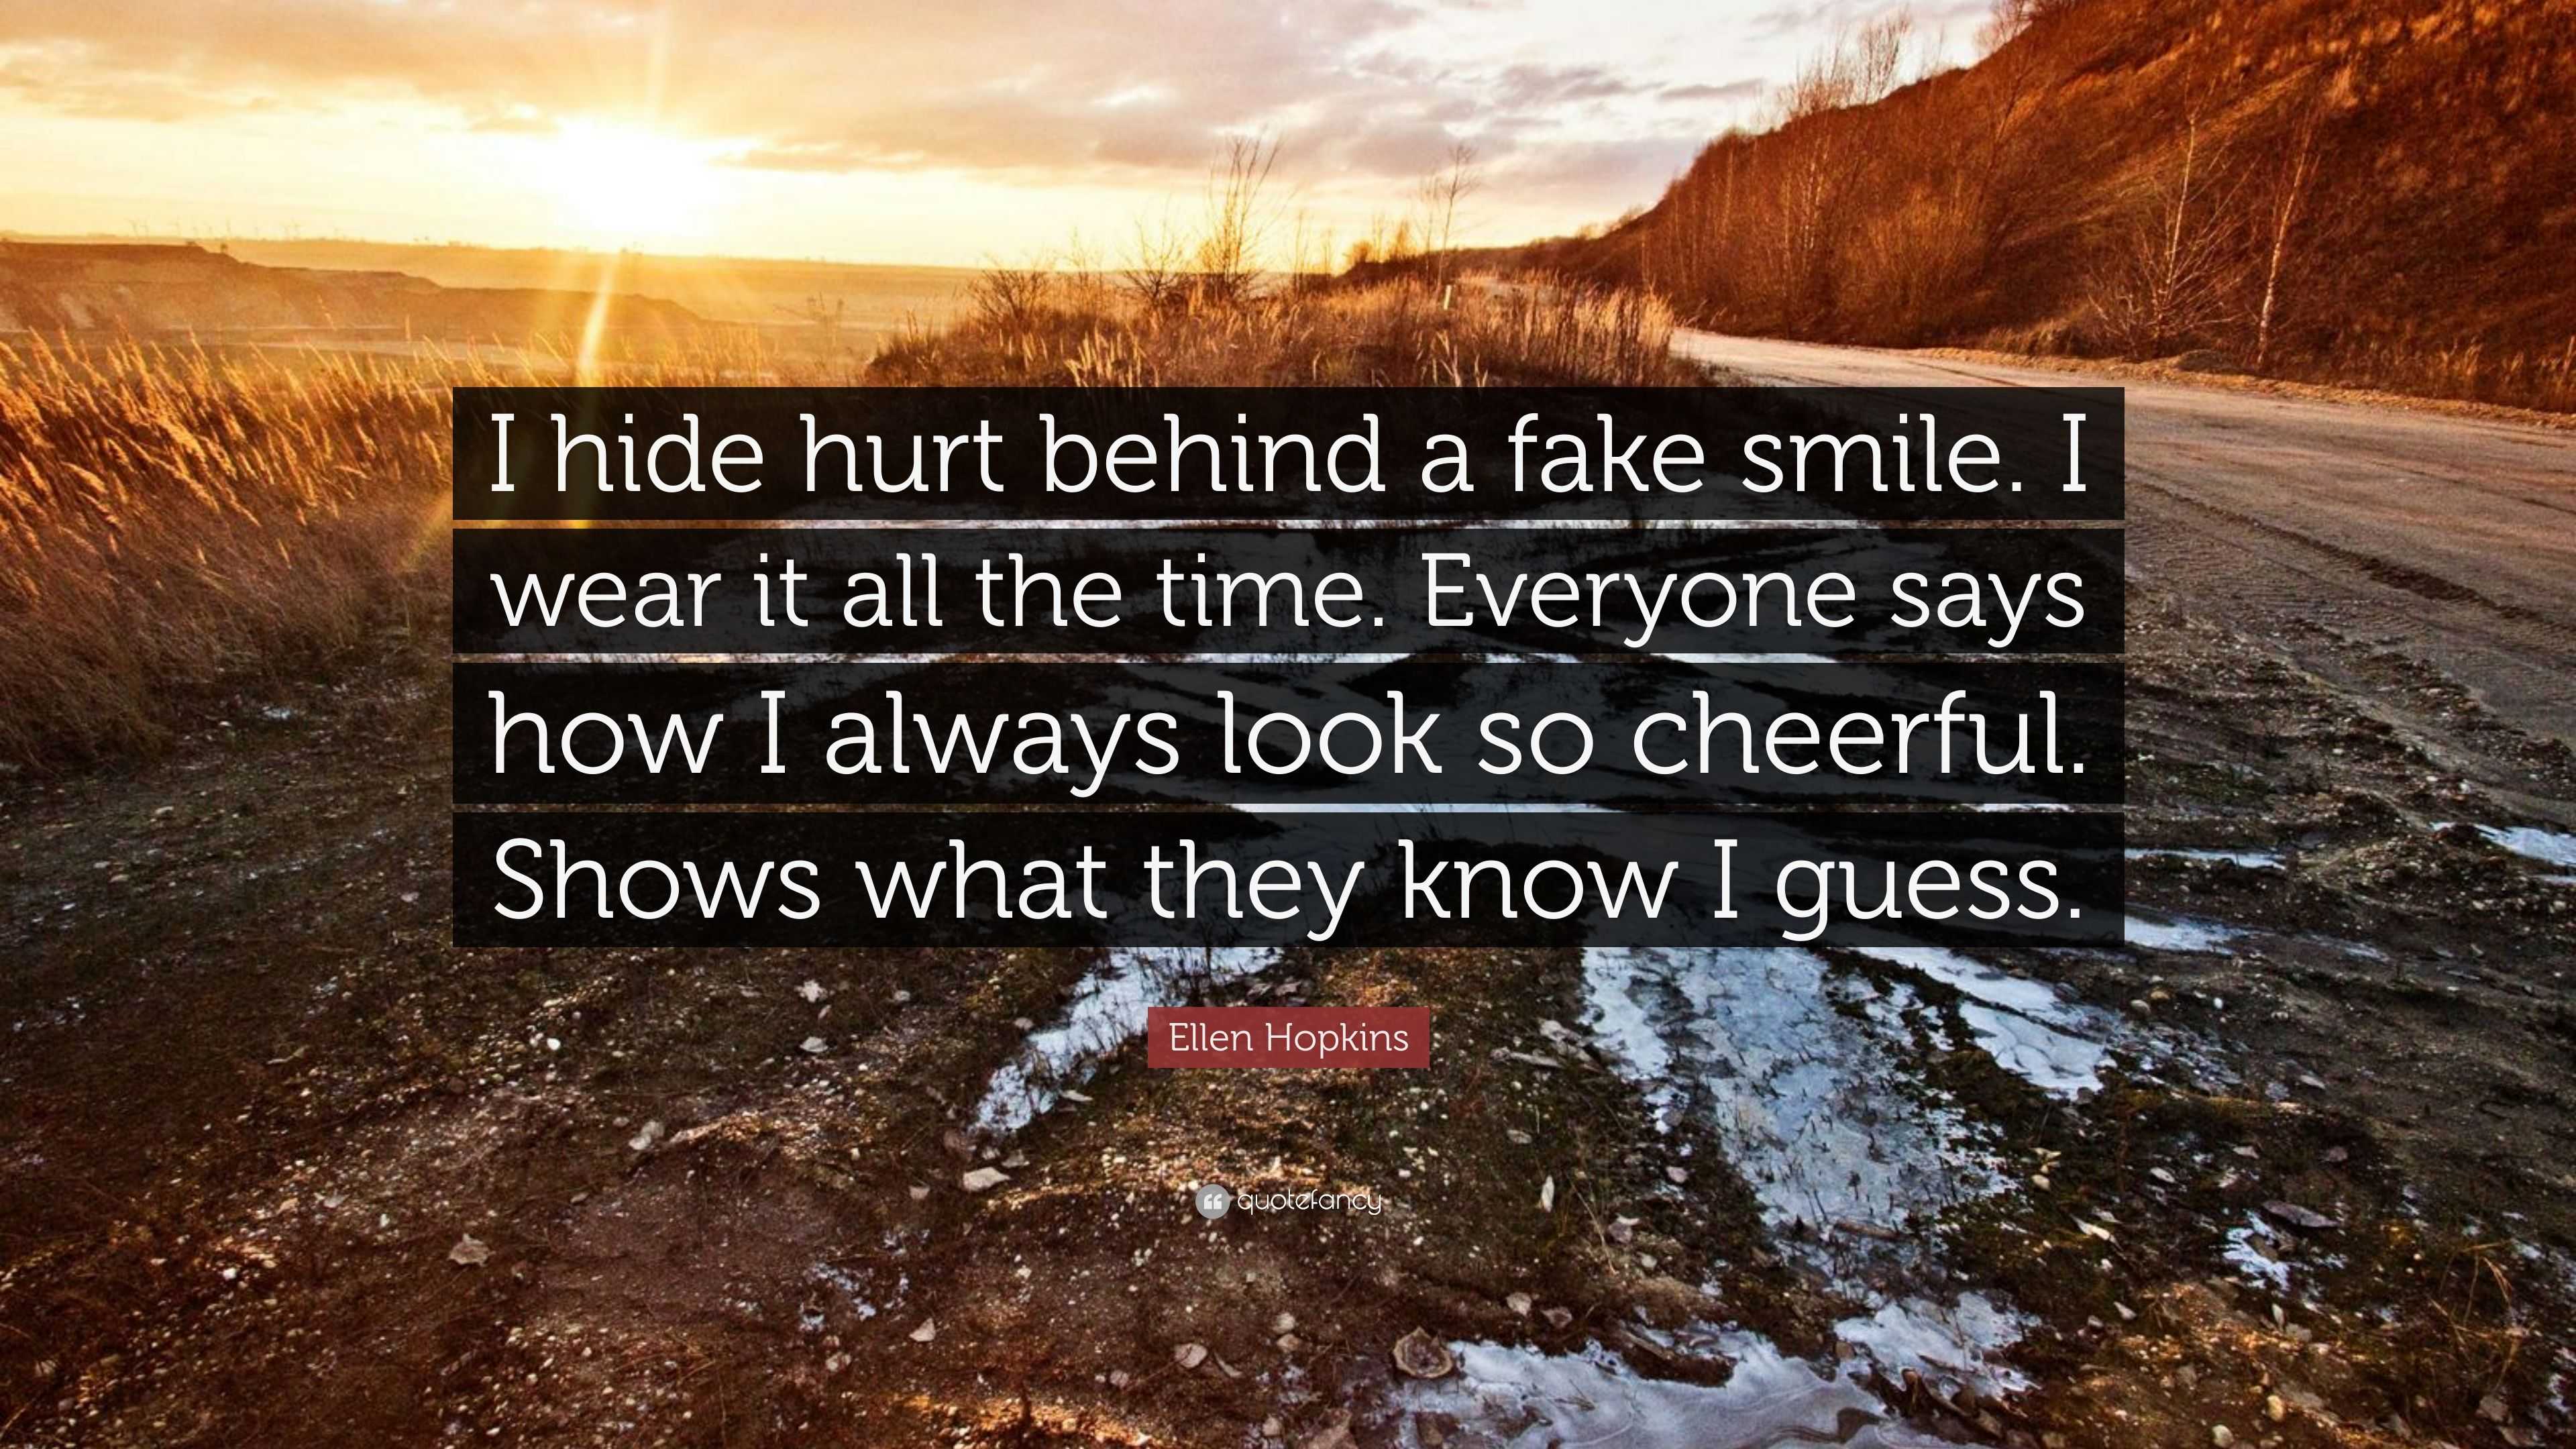 Ellen Hopkins Quote “I hide hurt behind a fake smile I wear it